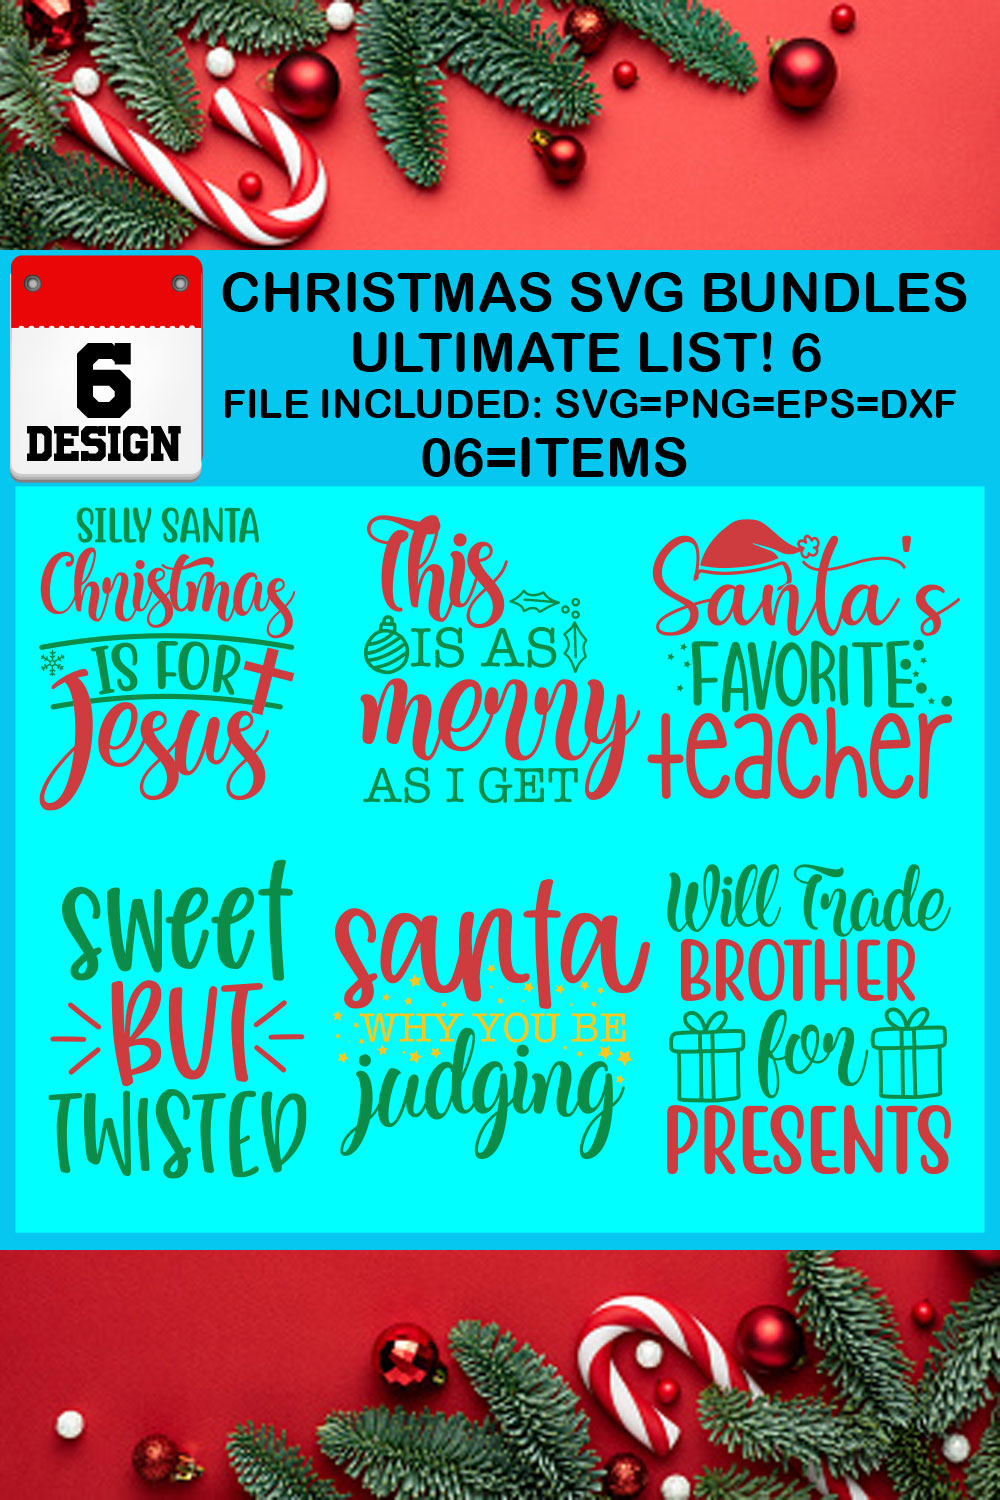 Christmas T-shirt SVG Design Bundles Ultimate List 6 Files pinterest preview image.